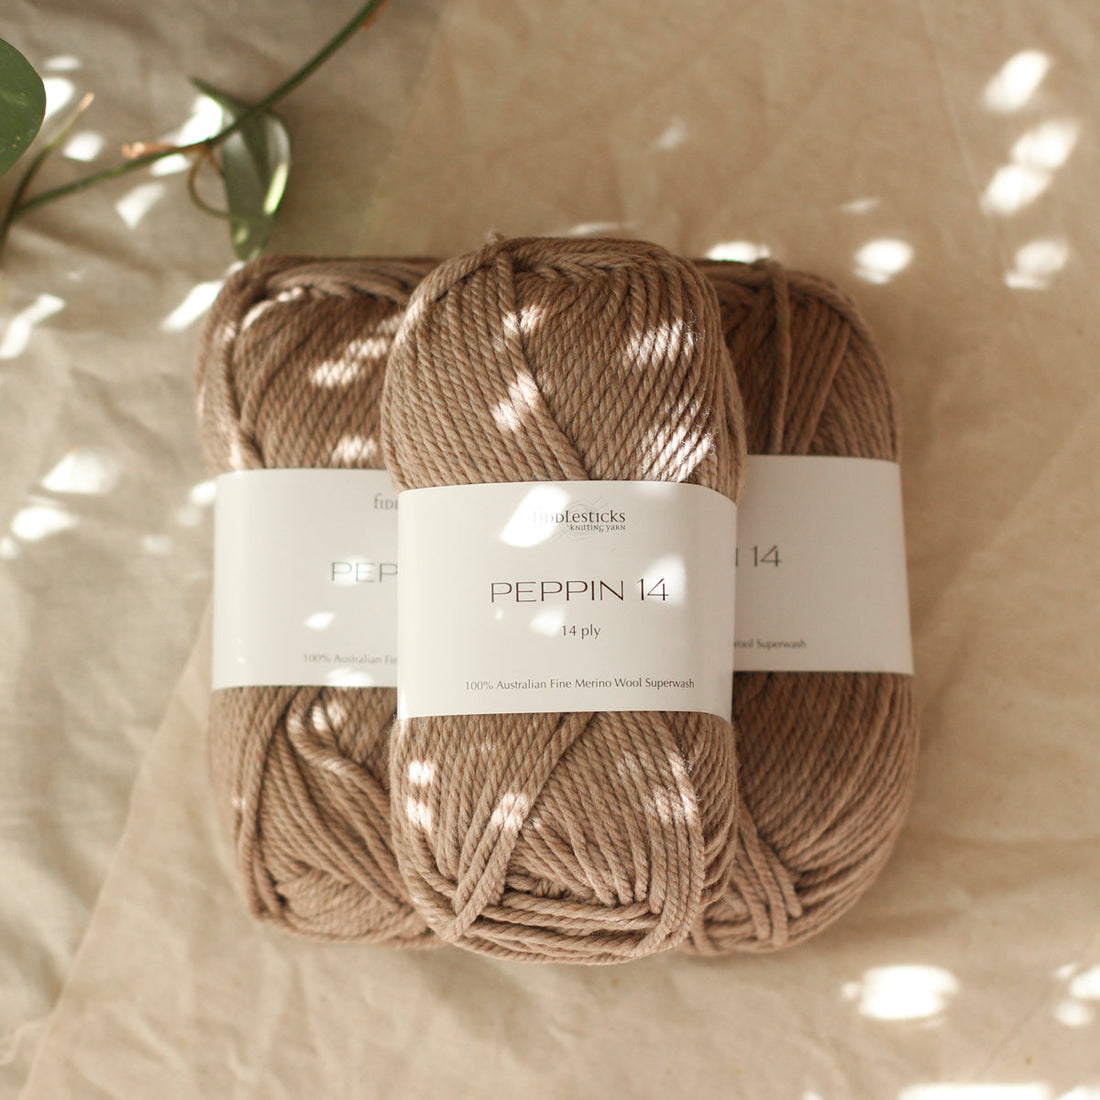 Chunky Gift Set | Knit or Crochet